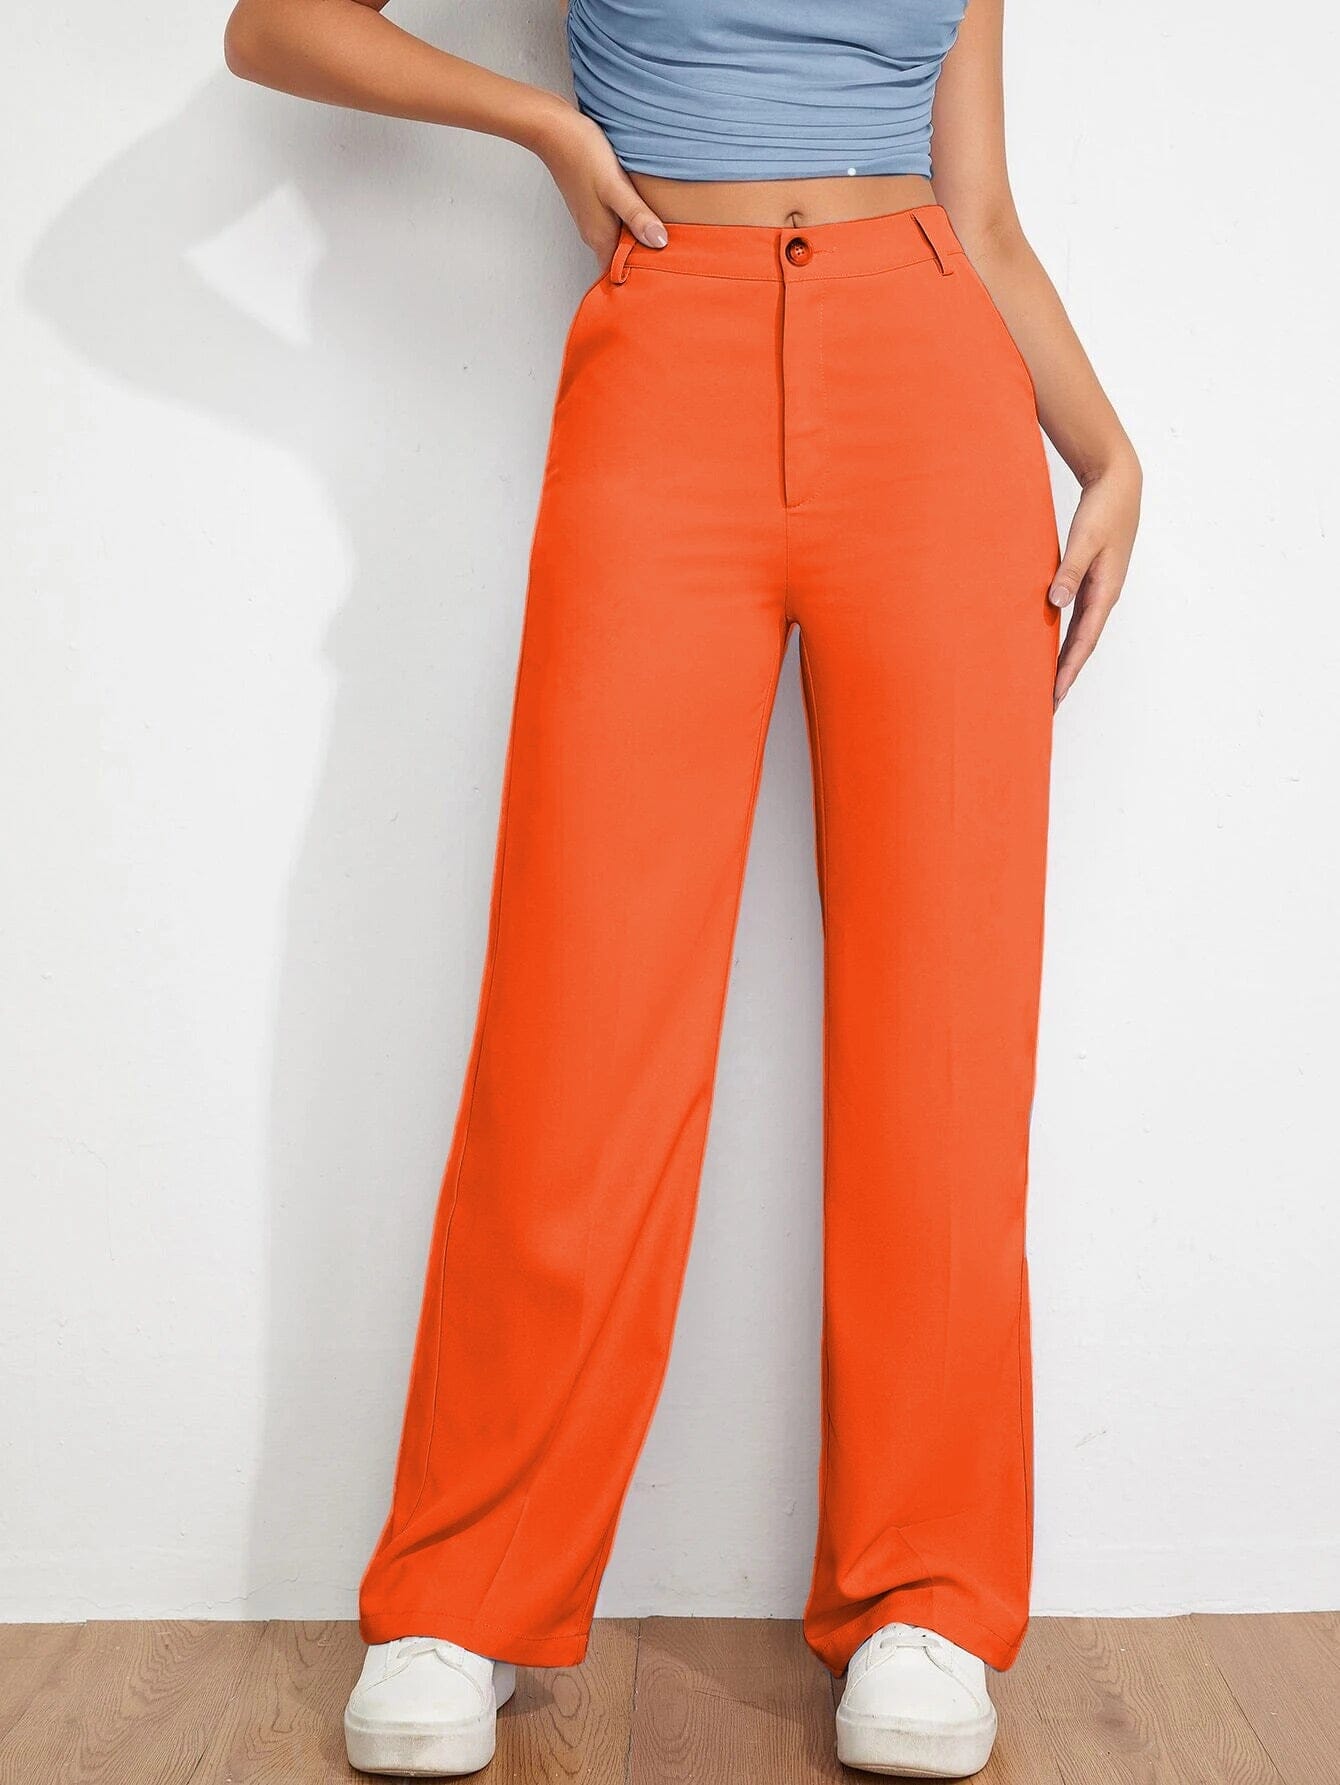 High Waist straight leg Pants PANTS Trendz New Orange 24 